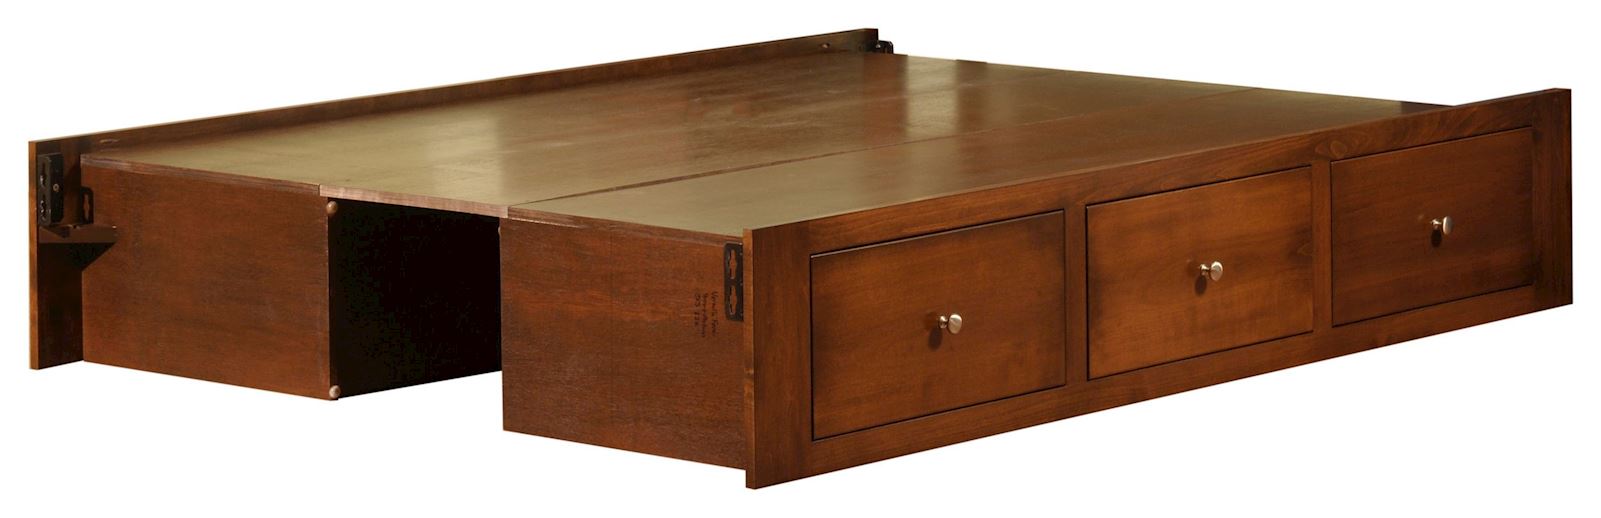 solid-wood-bed-rail-storage-drawers